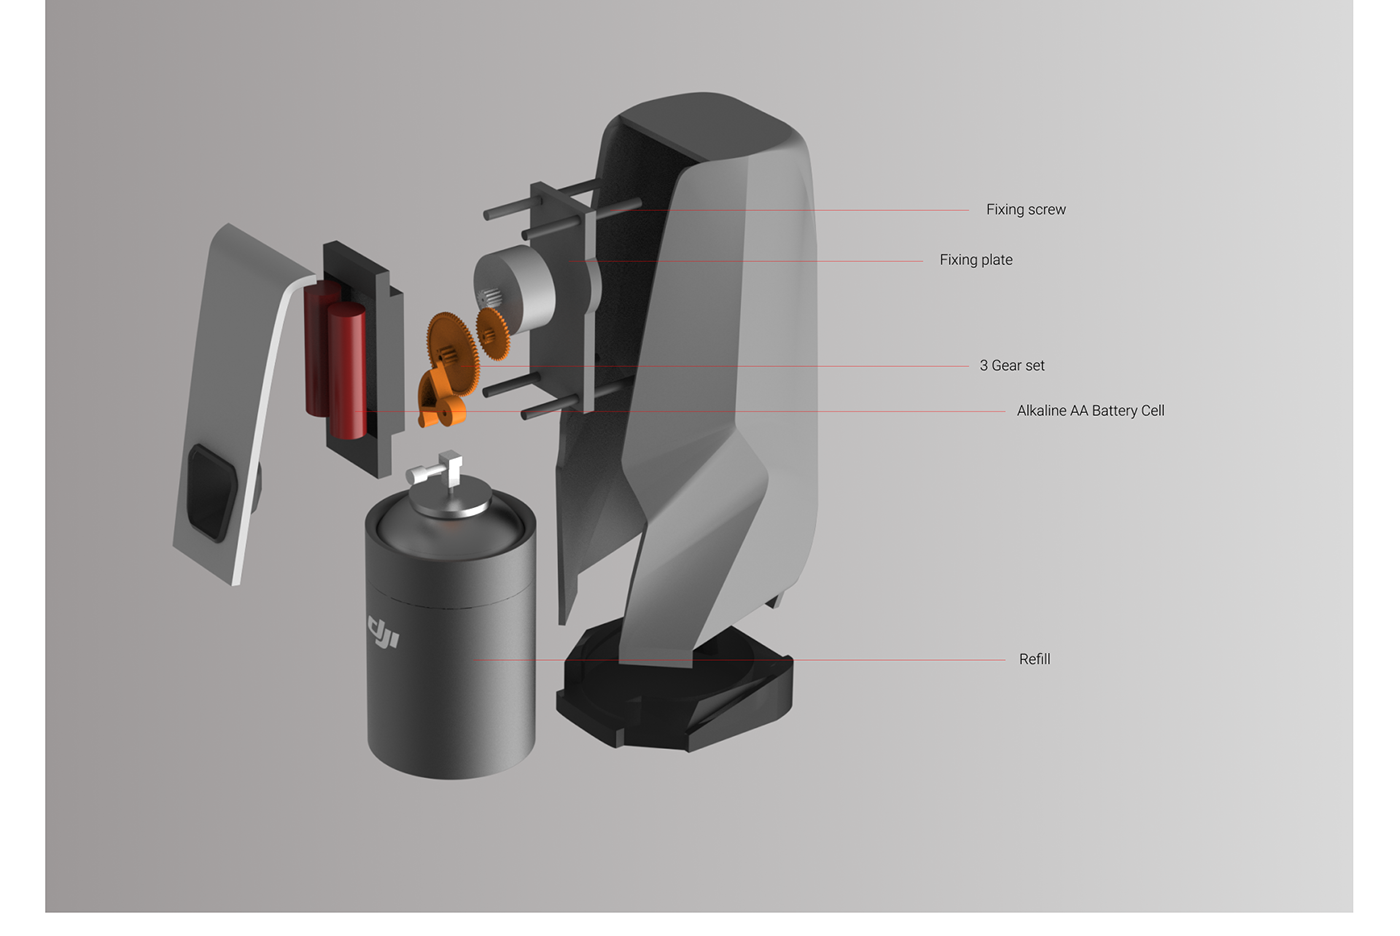 DJI design product design  sketching industrial design  portfolio Render keyshot visualization airfreshner